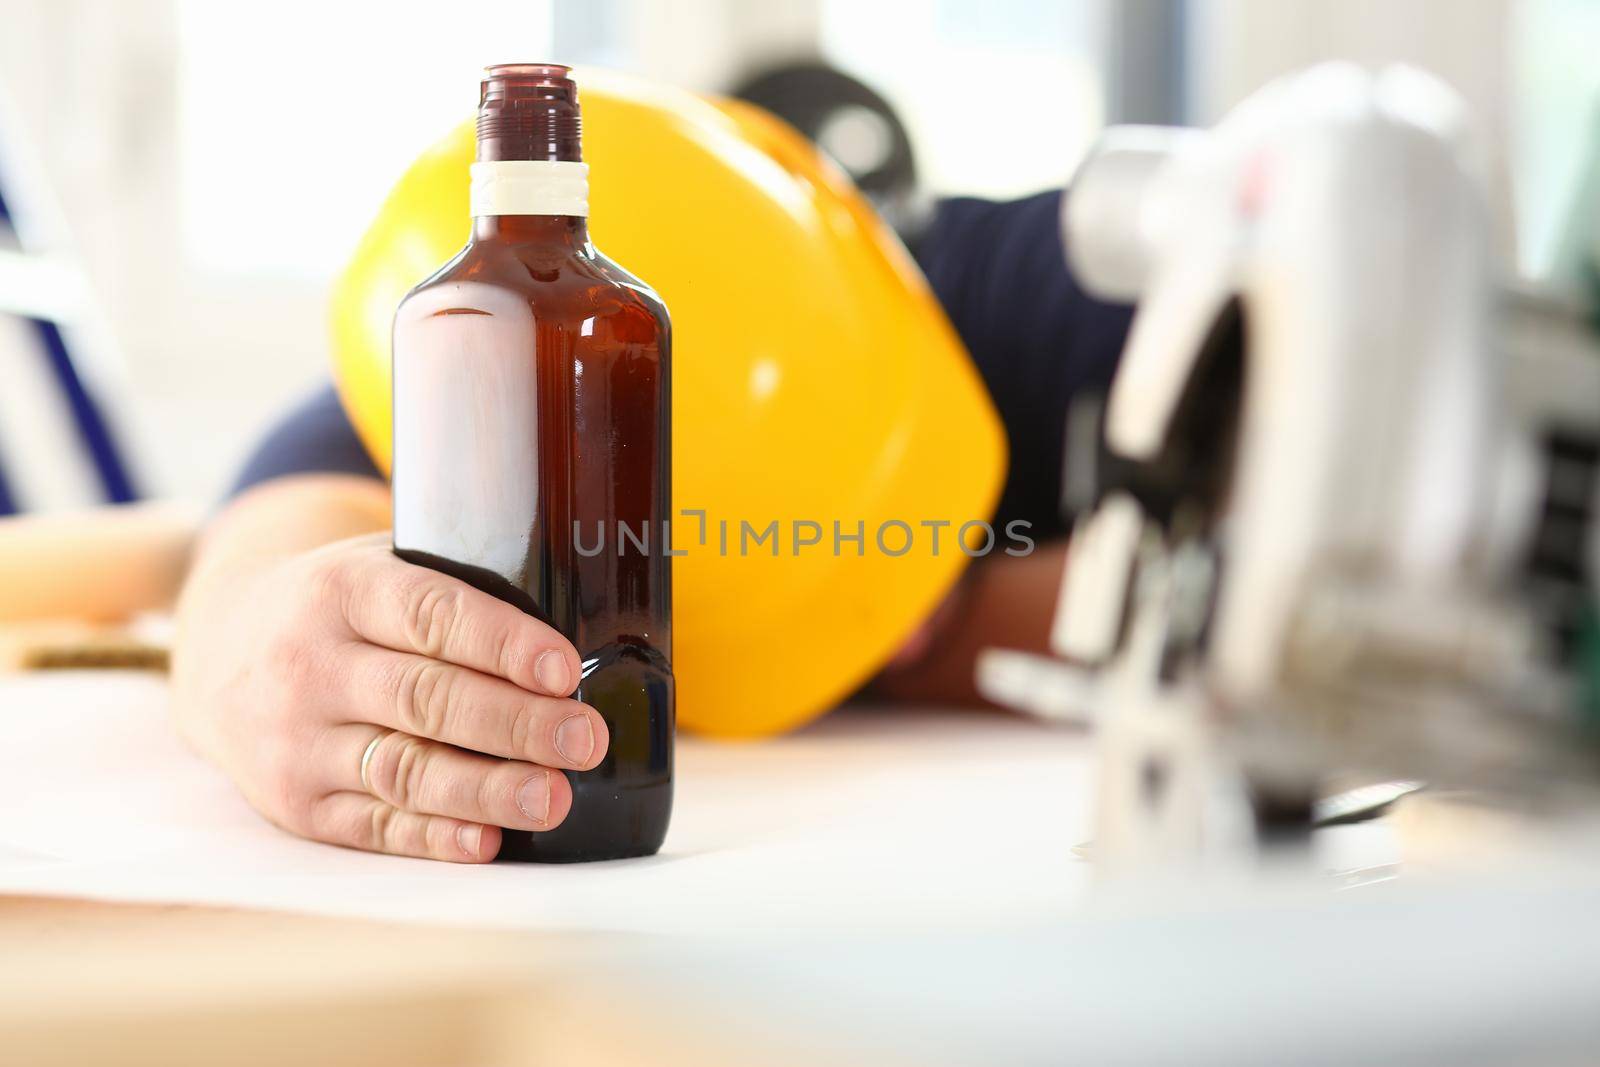 Arm of drunken worker in yellow helmet hold liquor bottle portrait. Manual job workplace DIY inspiration fix shop hard hat industrial education profession career